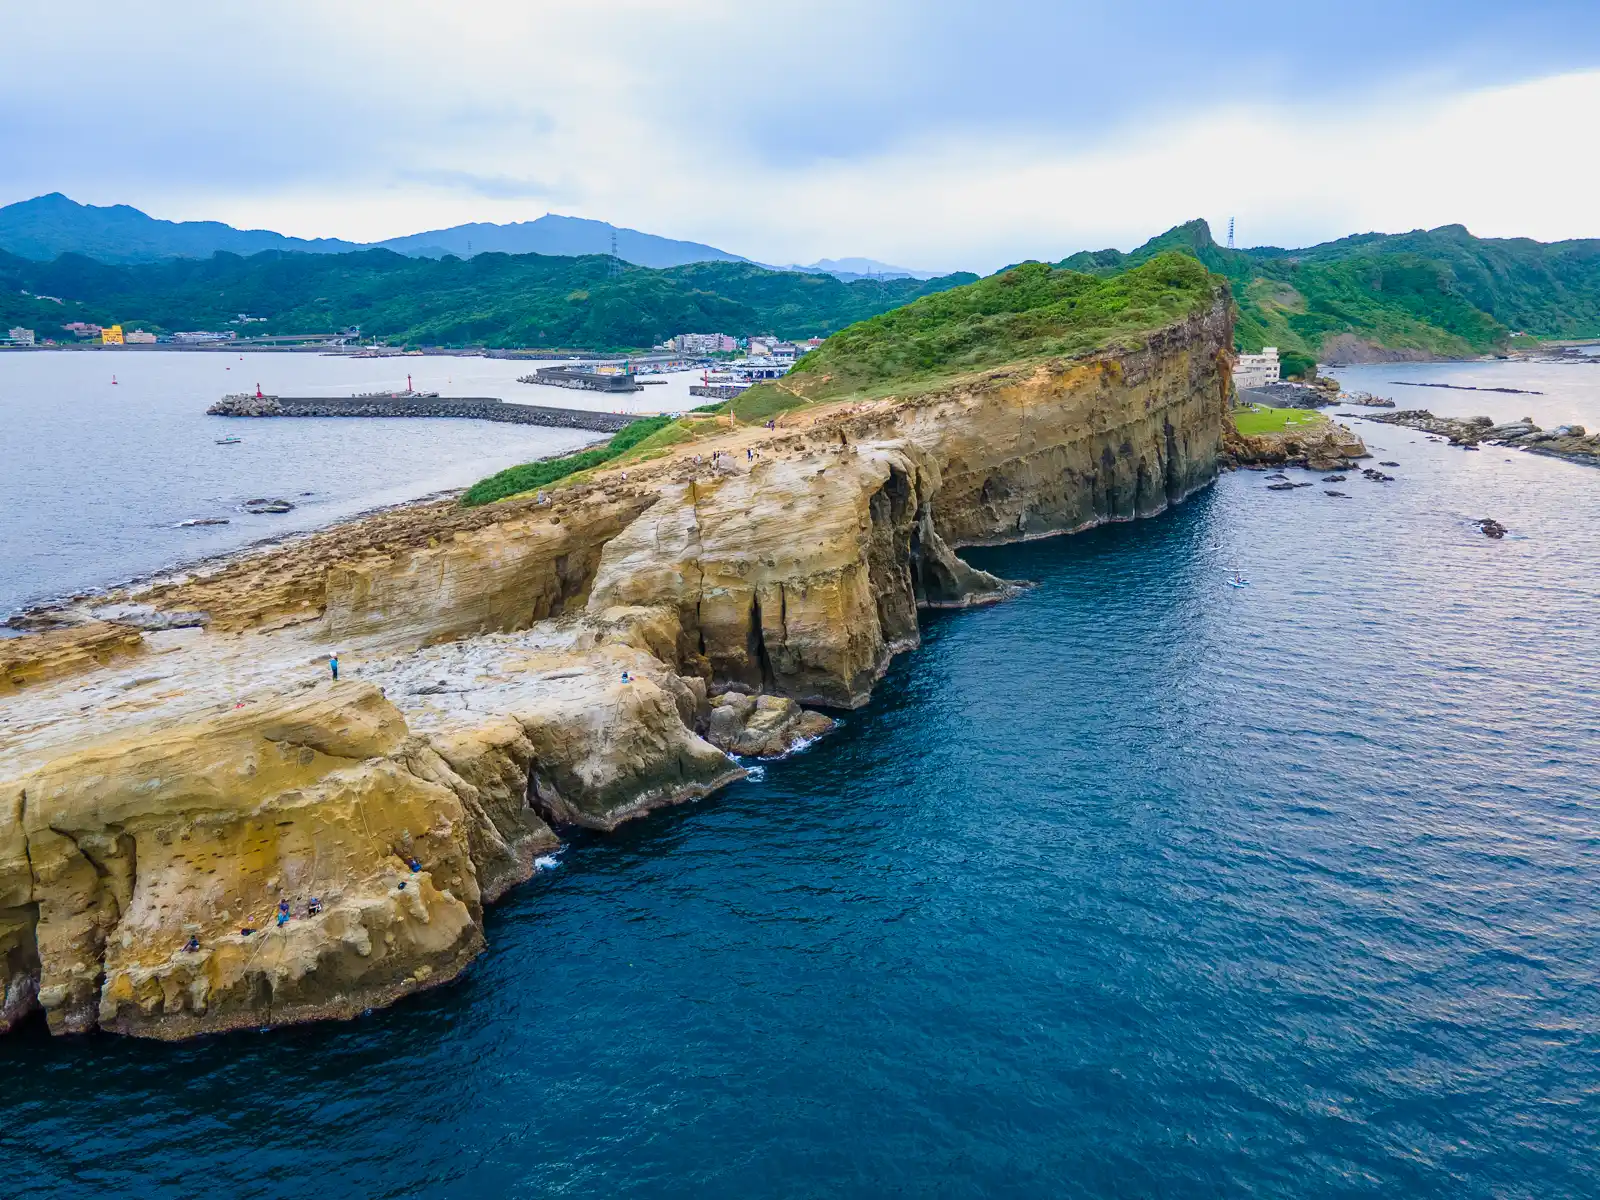 Private Taiwan Northeast Coast Tour: Longdong, Nanya and Jiaoshi